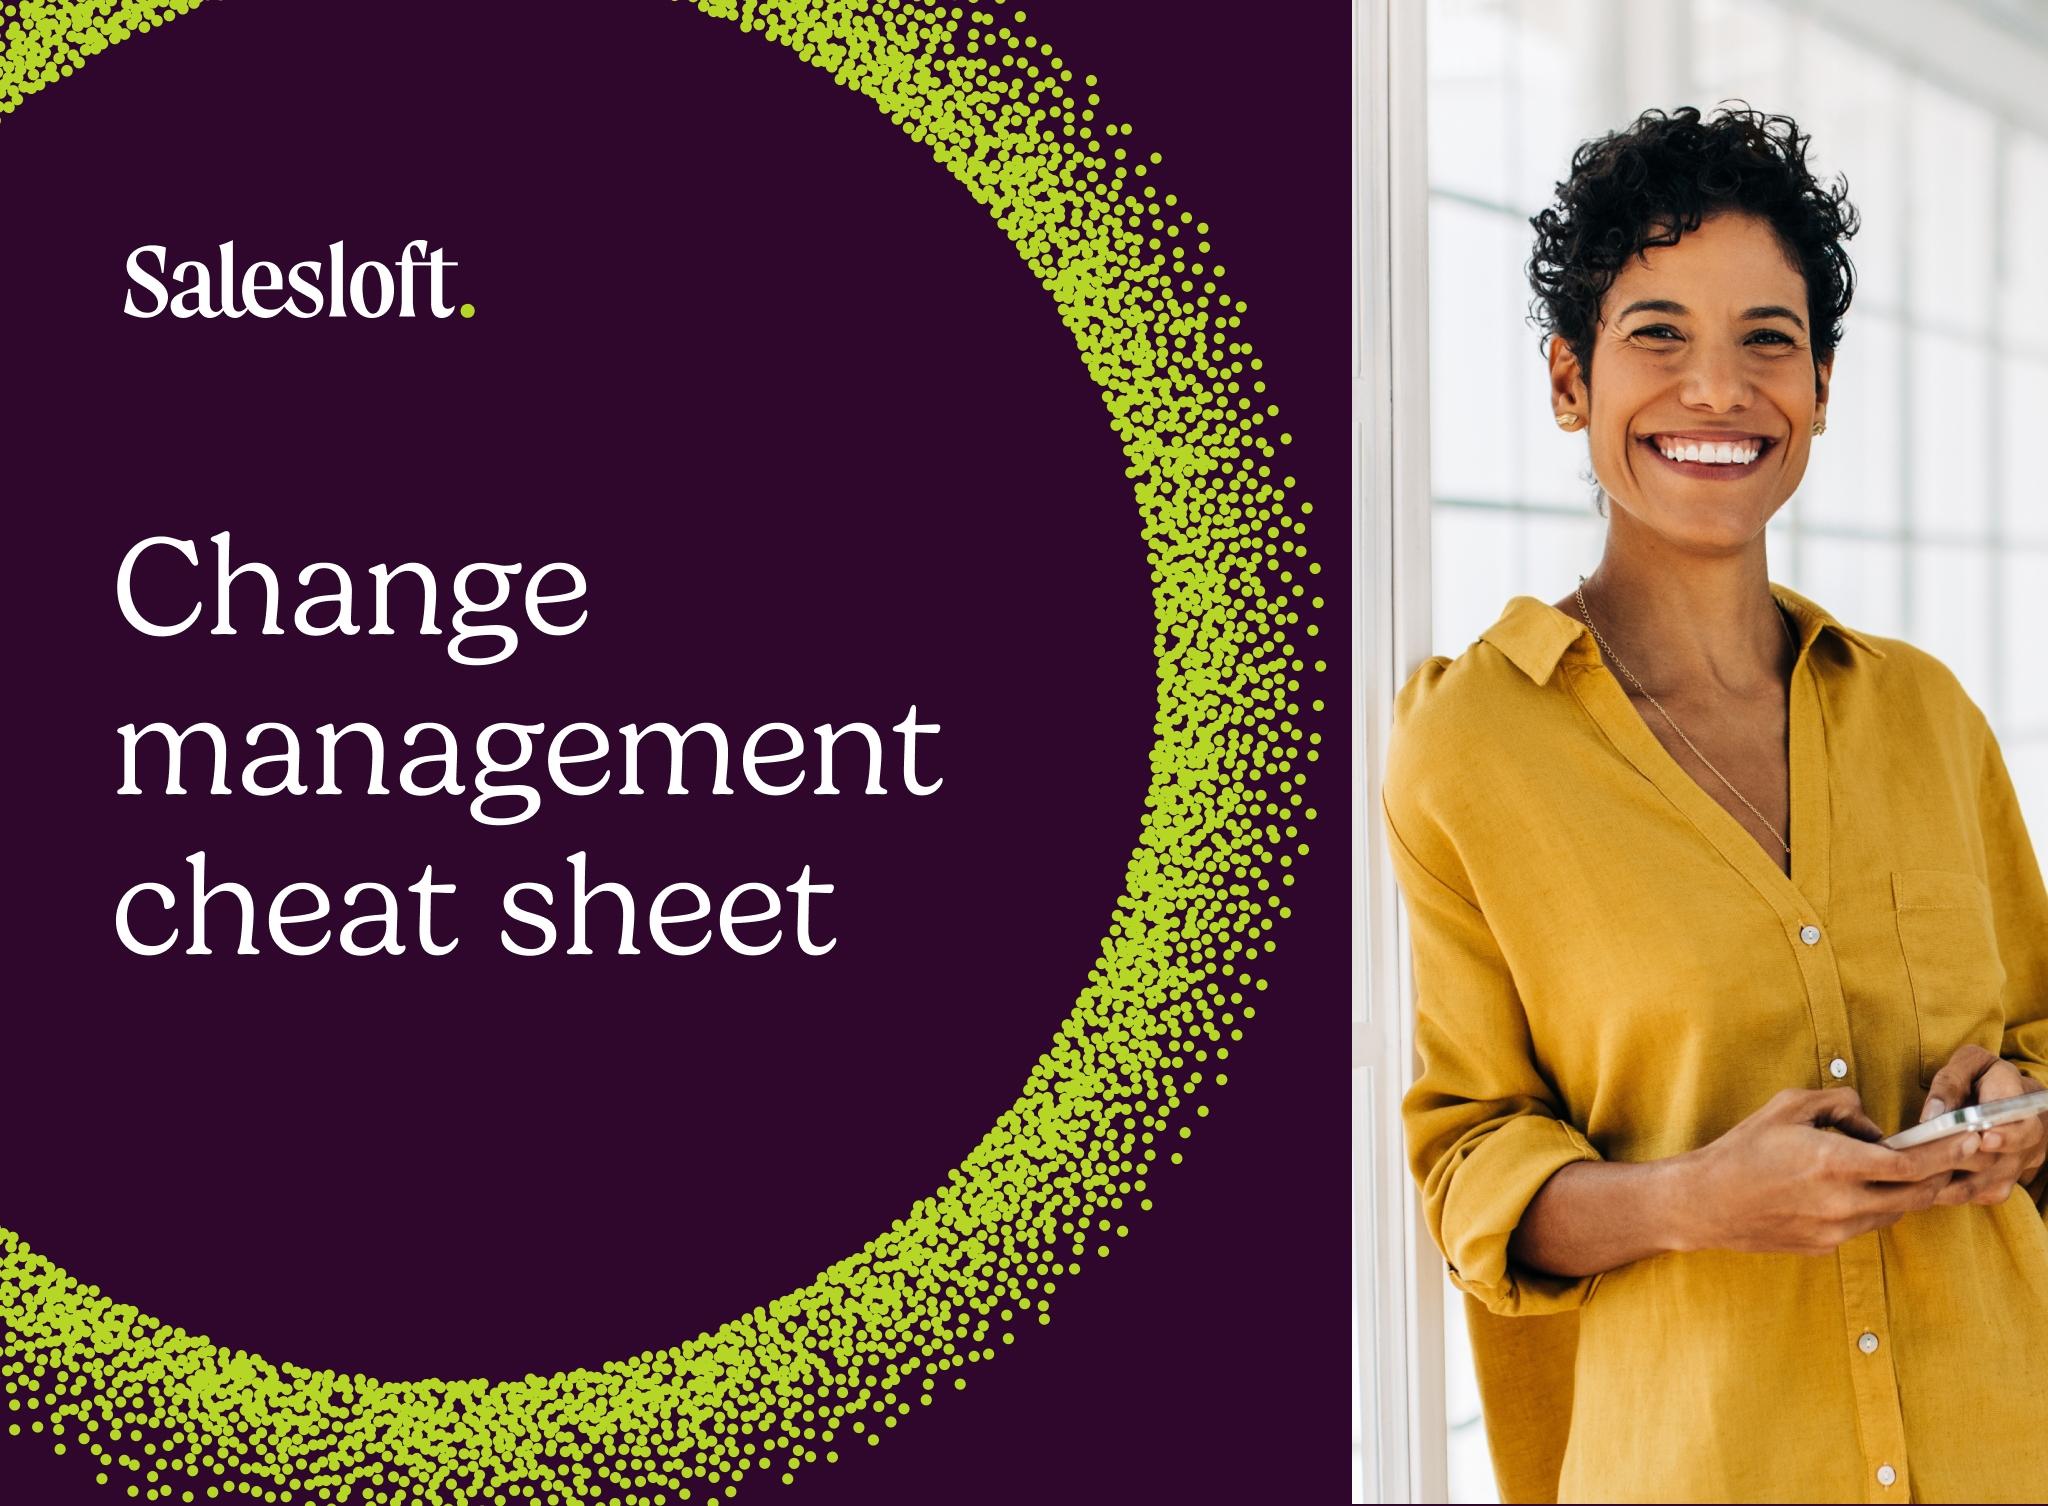 "Change management cheat sheet"